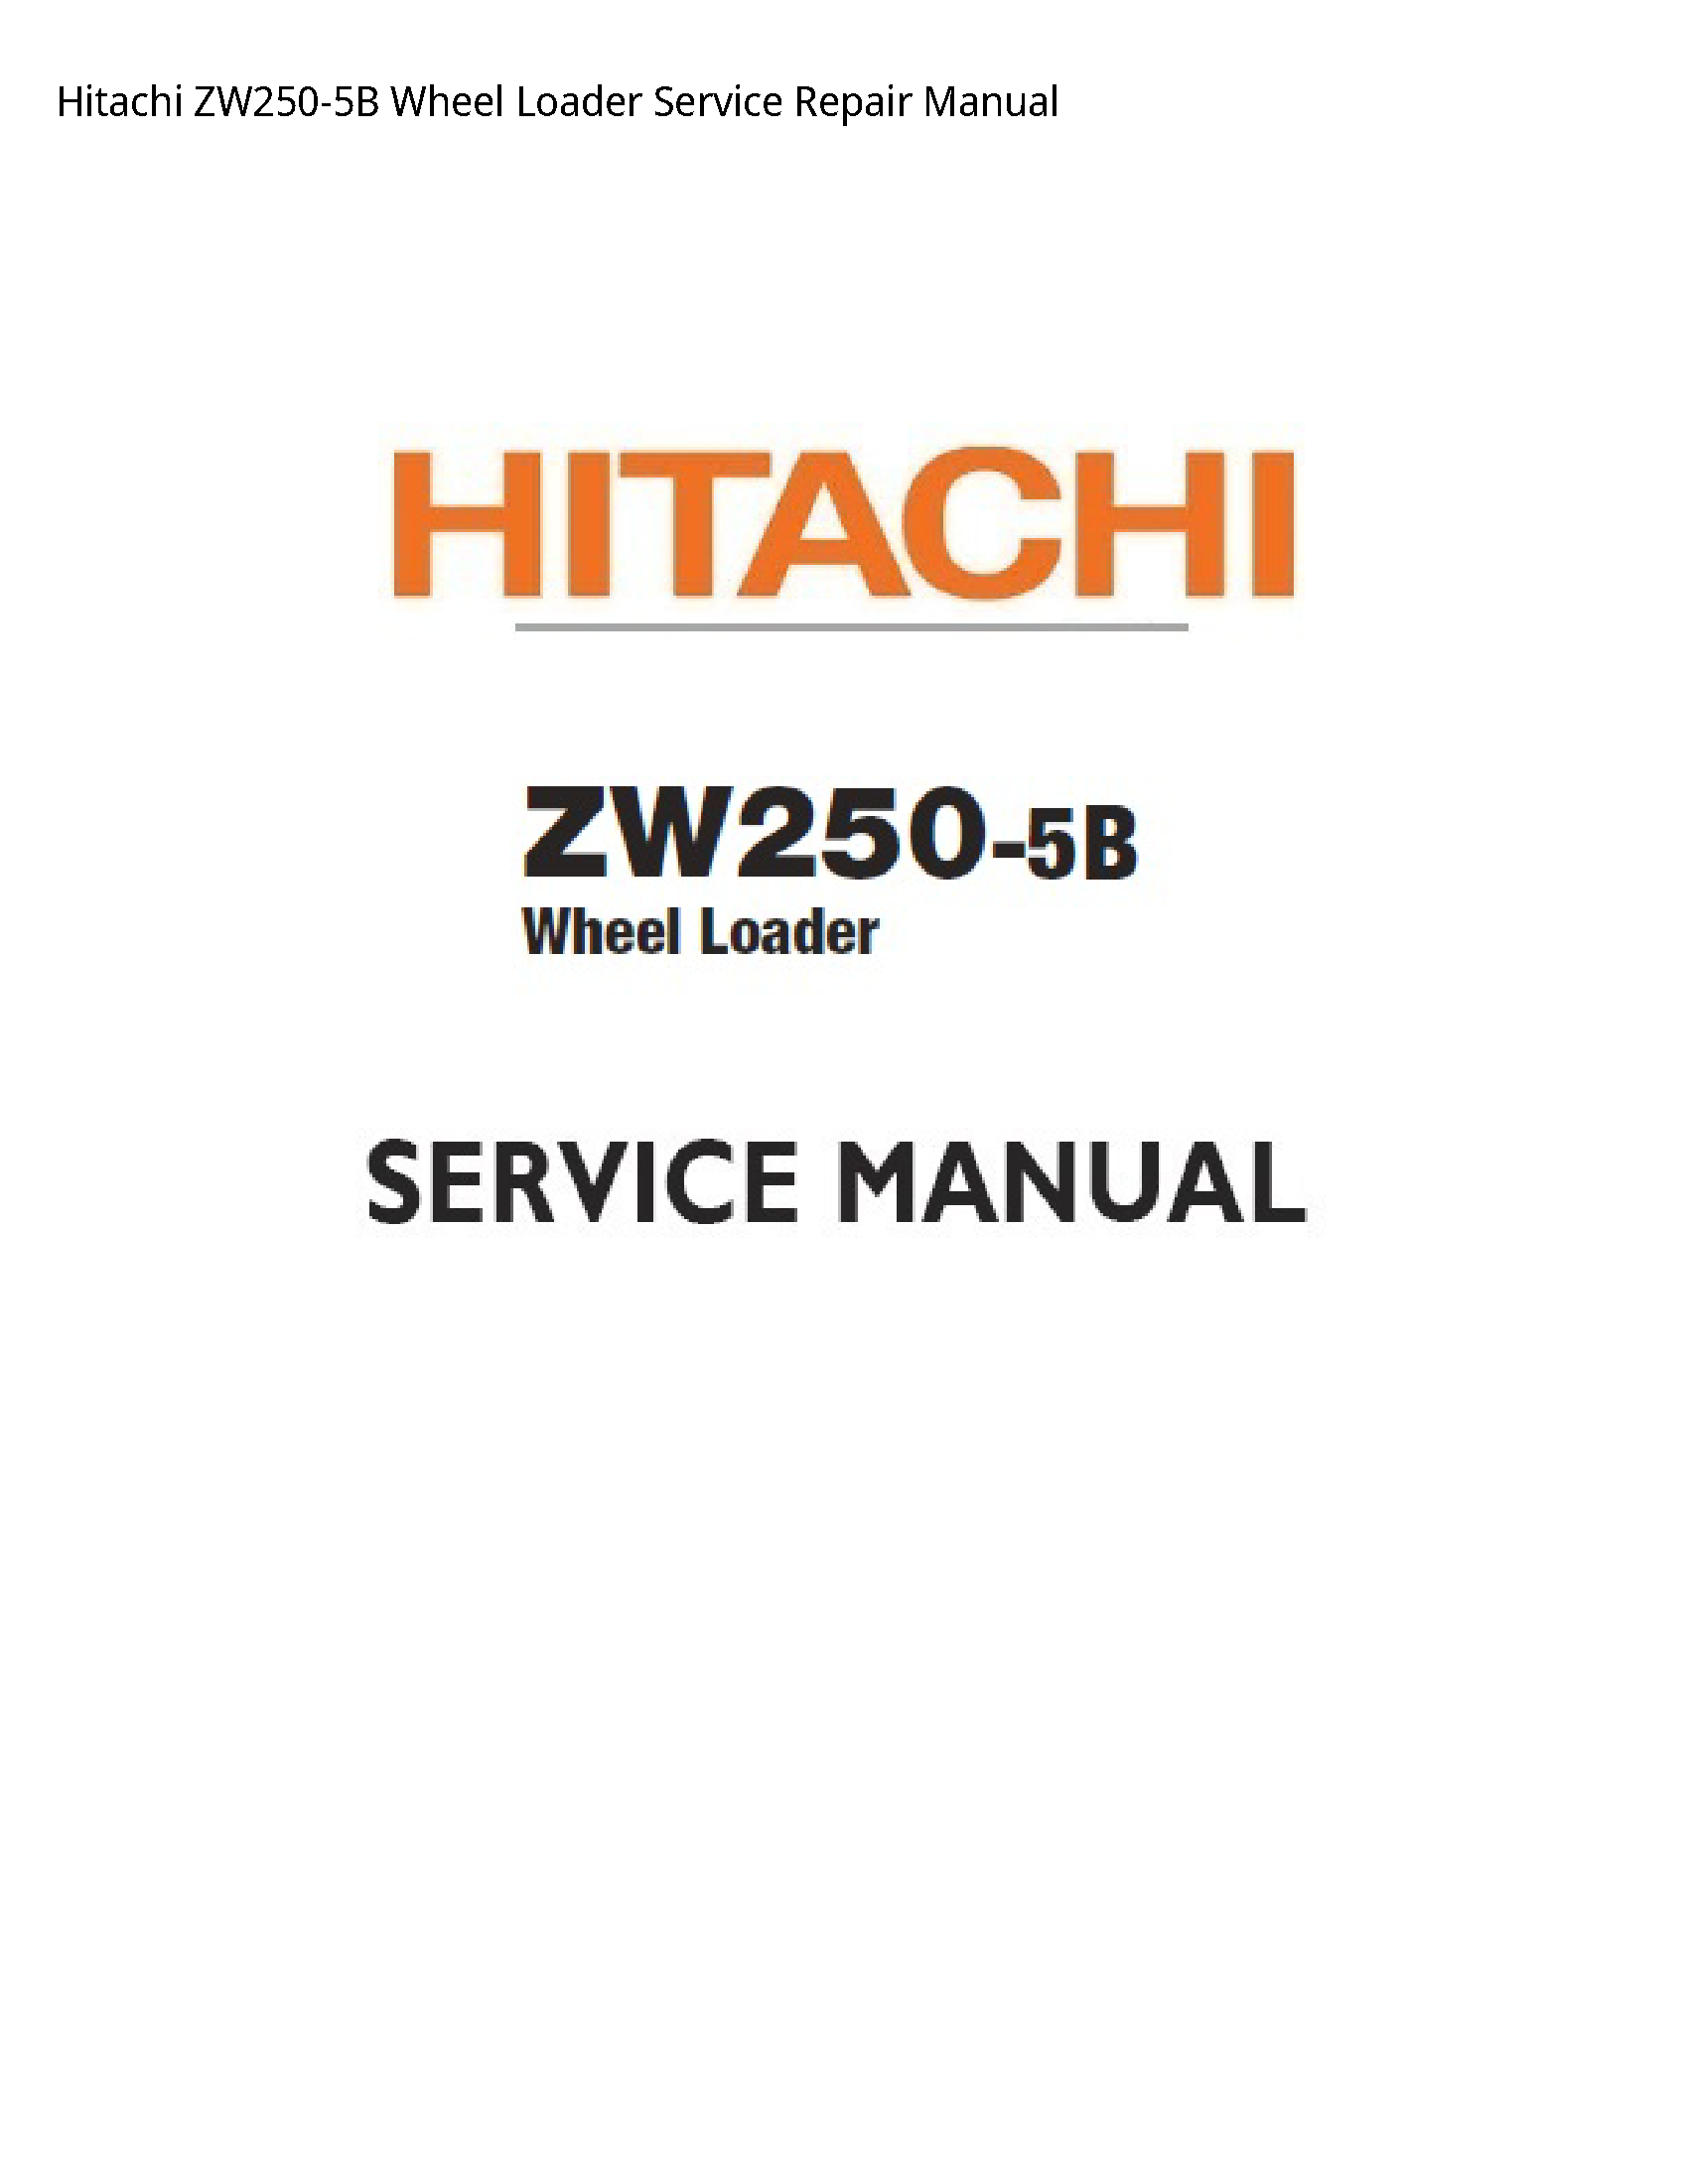 Hitachi ZW250-5B Wheel Loader manual